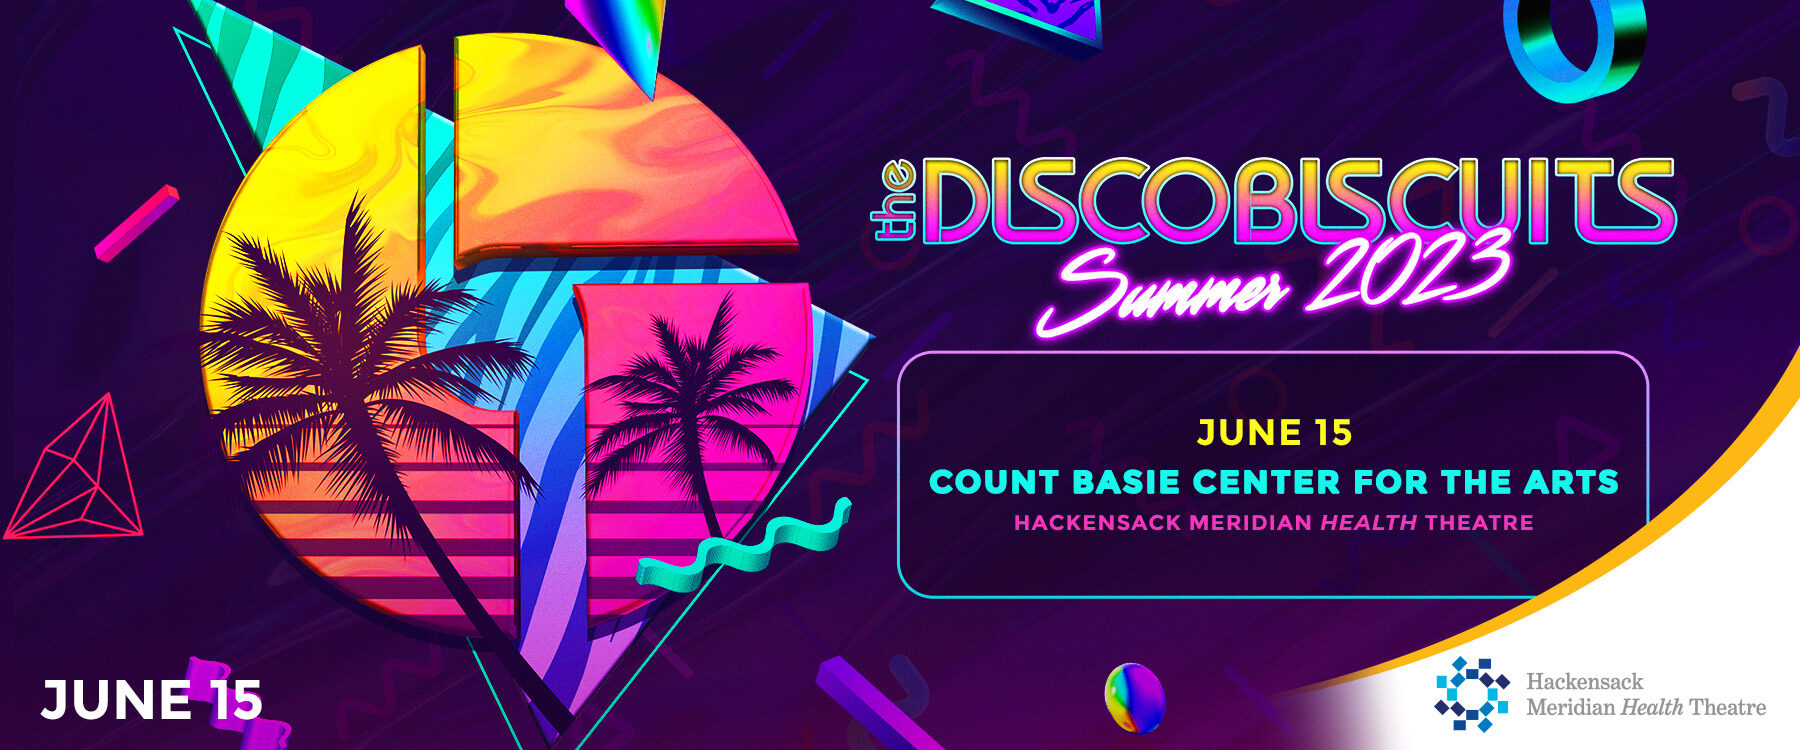 The Disco Biscuits June 15